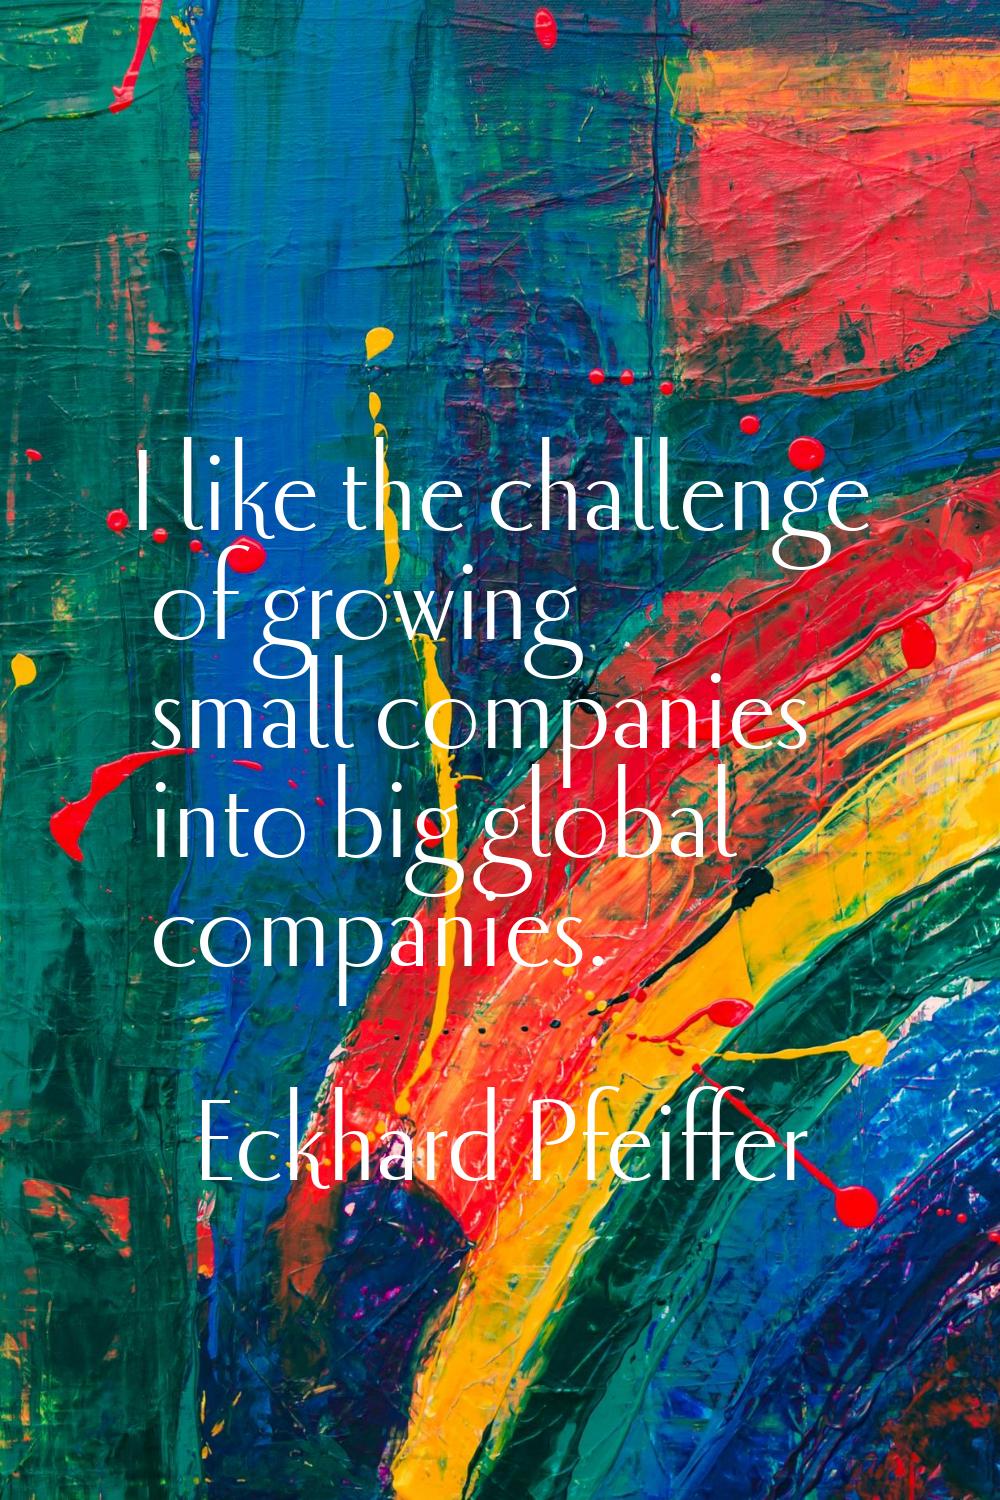 I like the challenge of growing small companies into big global companies.